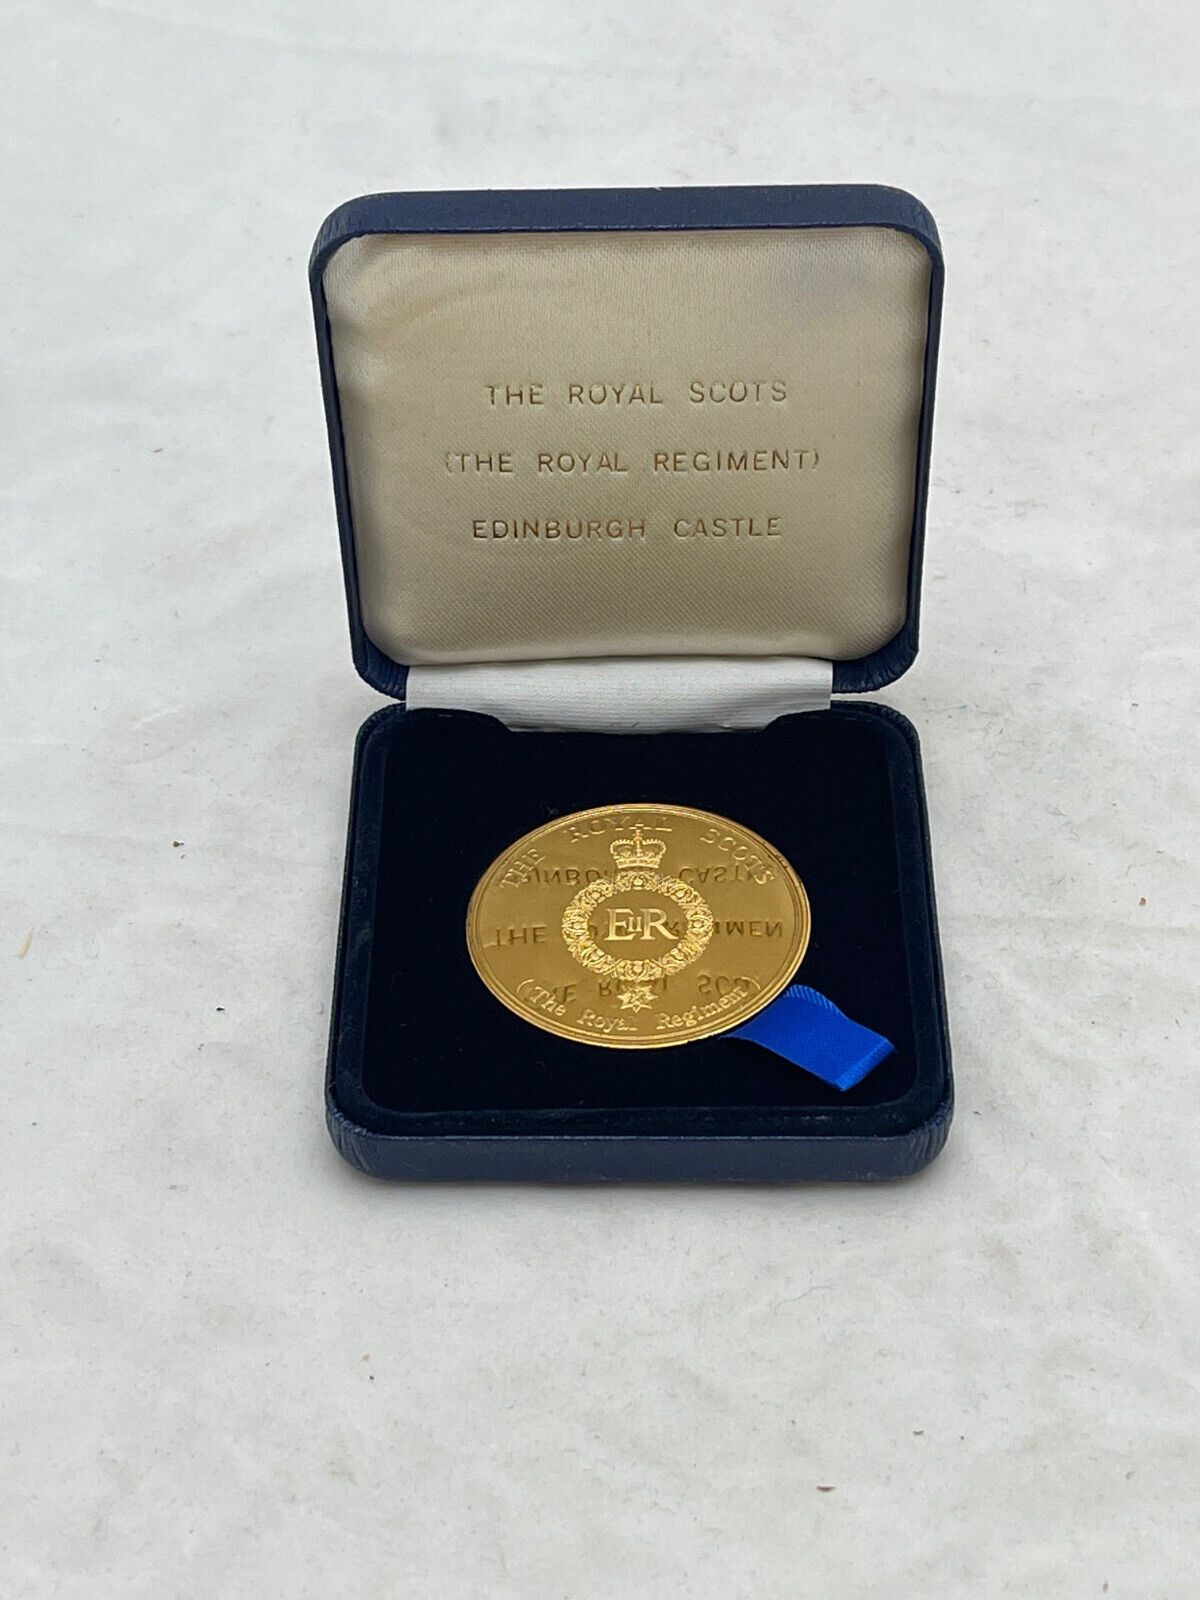 VTG ROYAL SCOTS TOYAL REGIMENT EDINBURGH CASTLE Proof Medal Medallion w/ Box